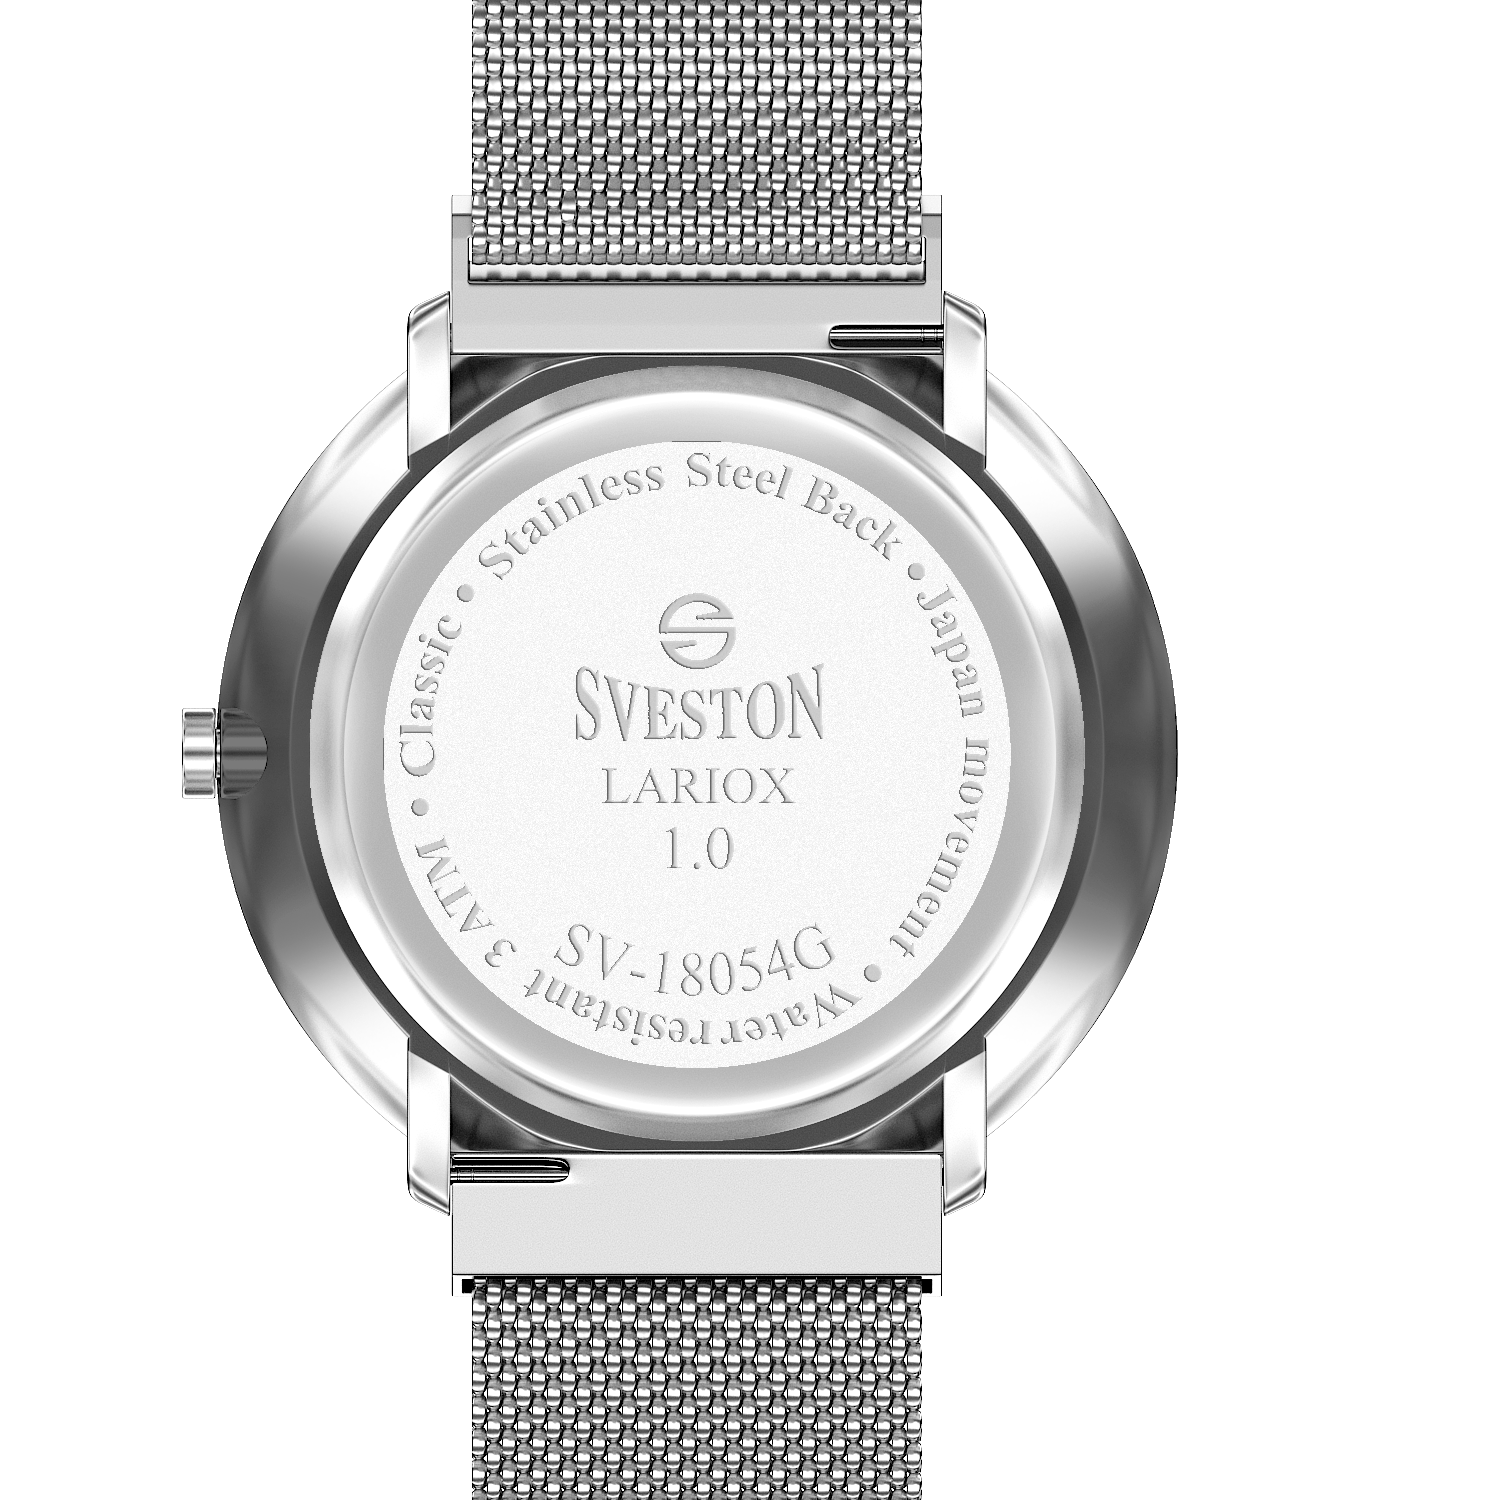 Sveston Lariox SV-18054 | Limited Edition